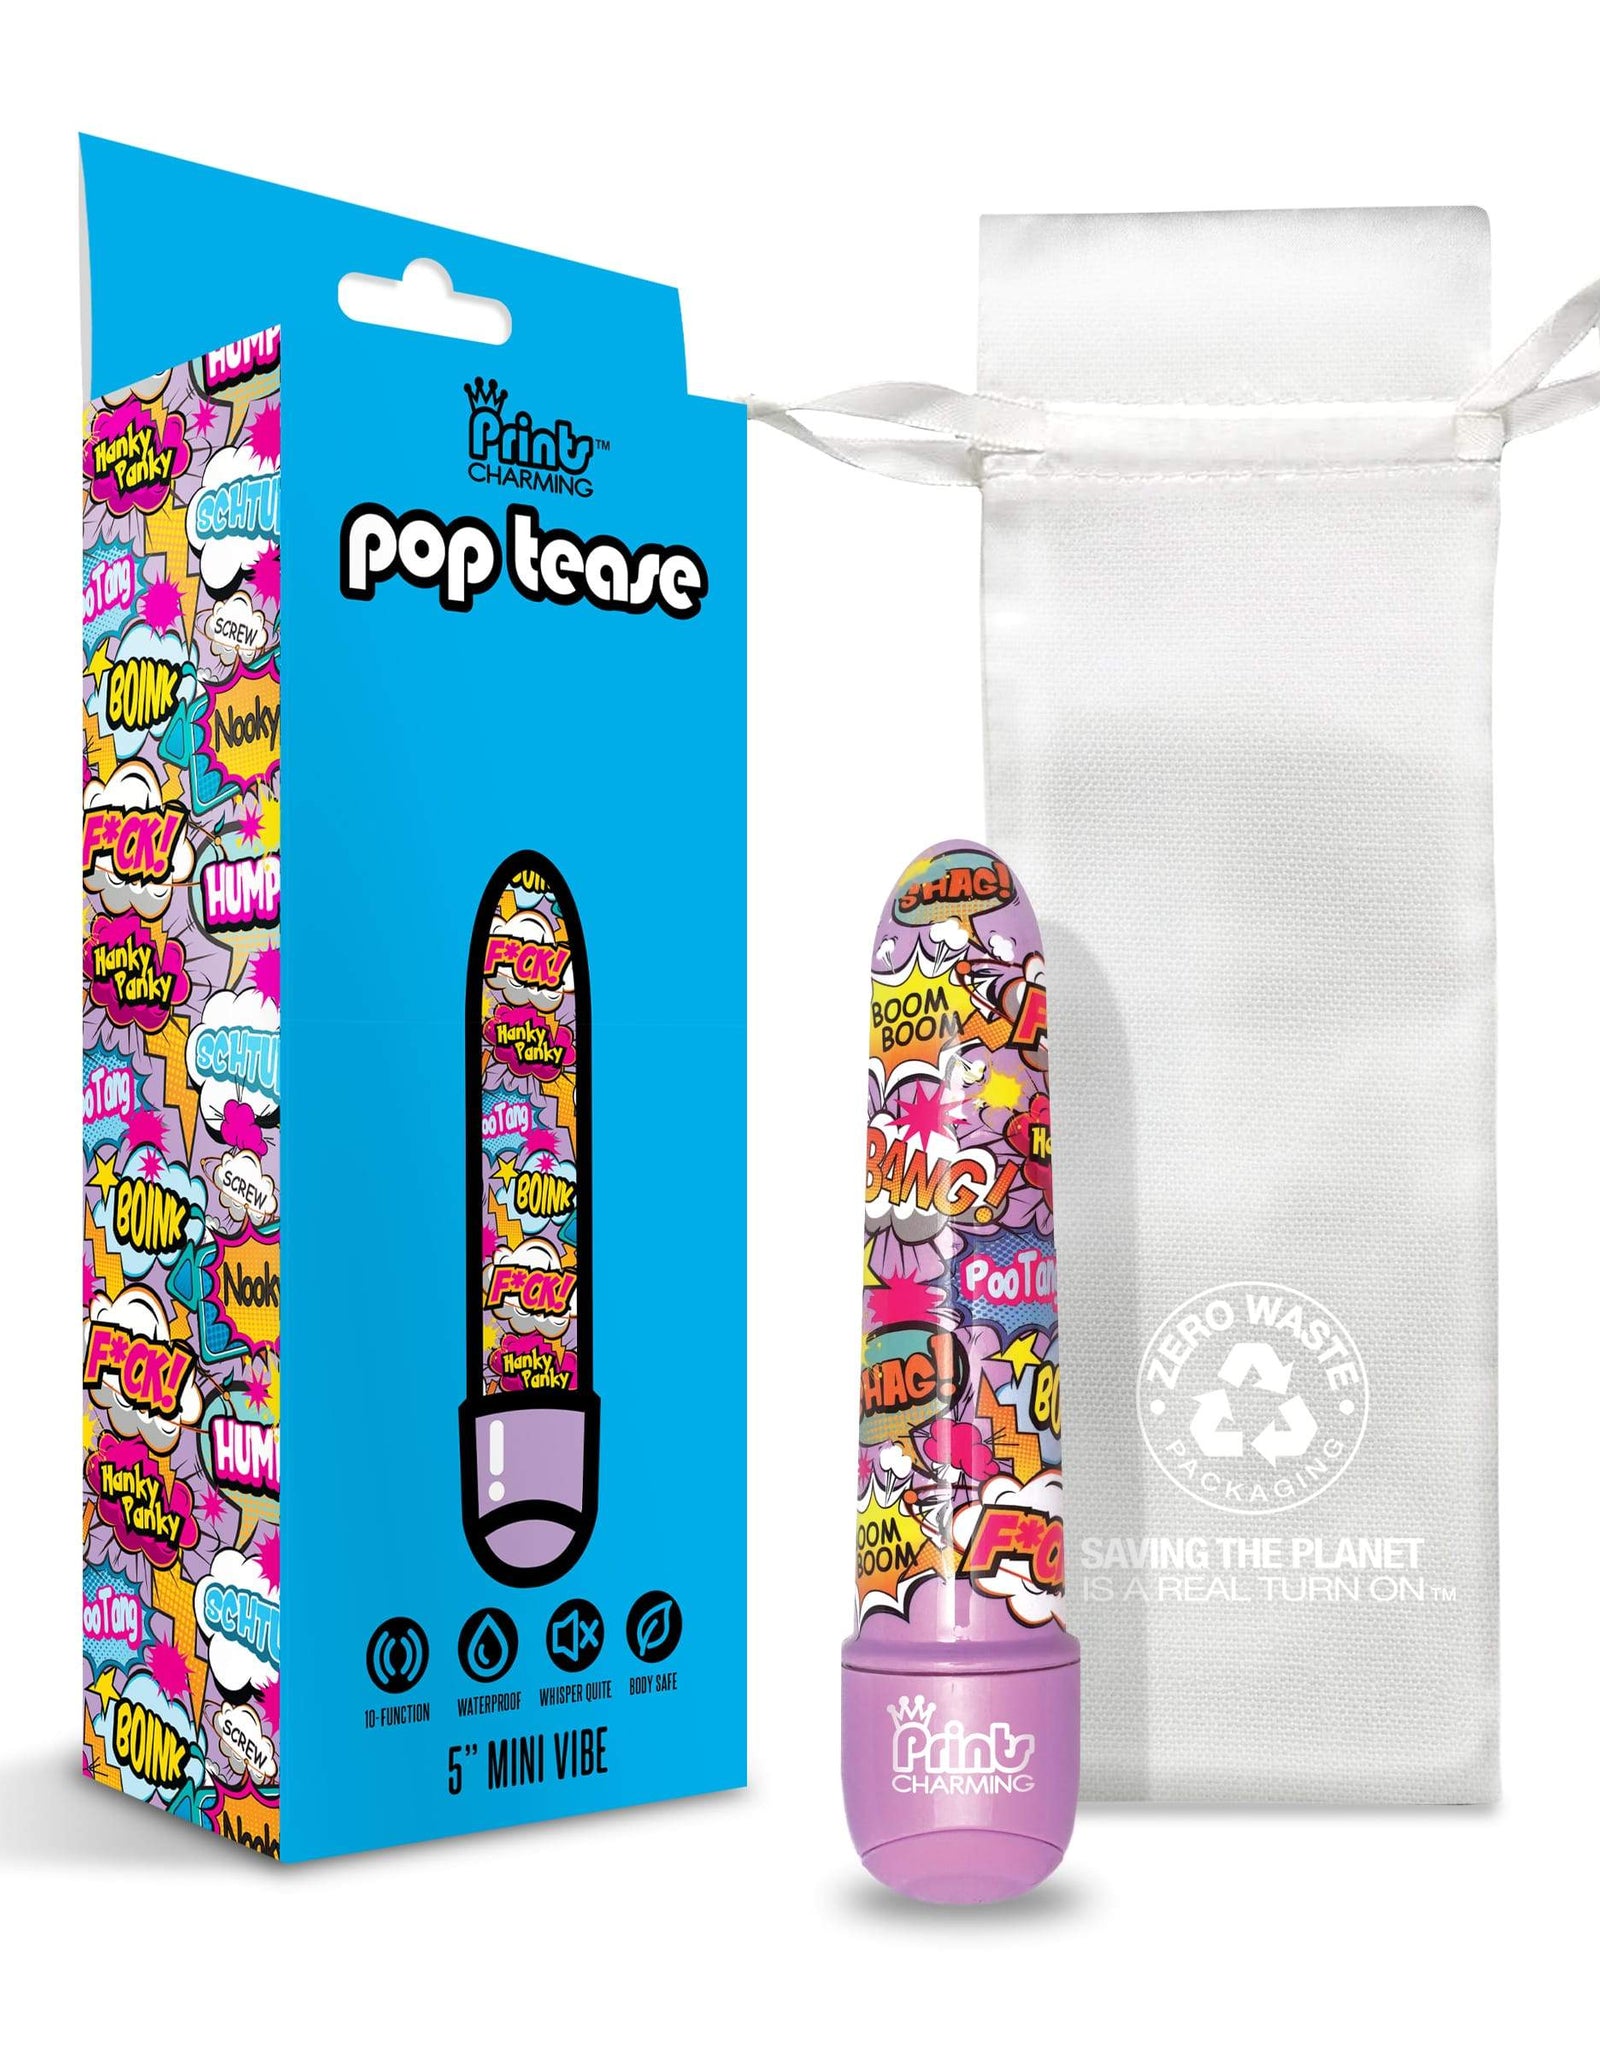 Prints Charming Pop Tease 5" Mini Vibrator, F*ck, Purple w/storage bag - The Happy Ending Shop